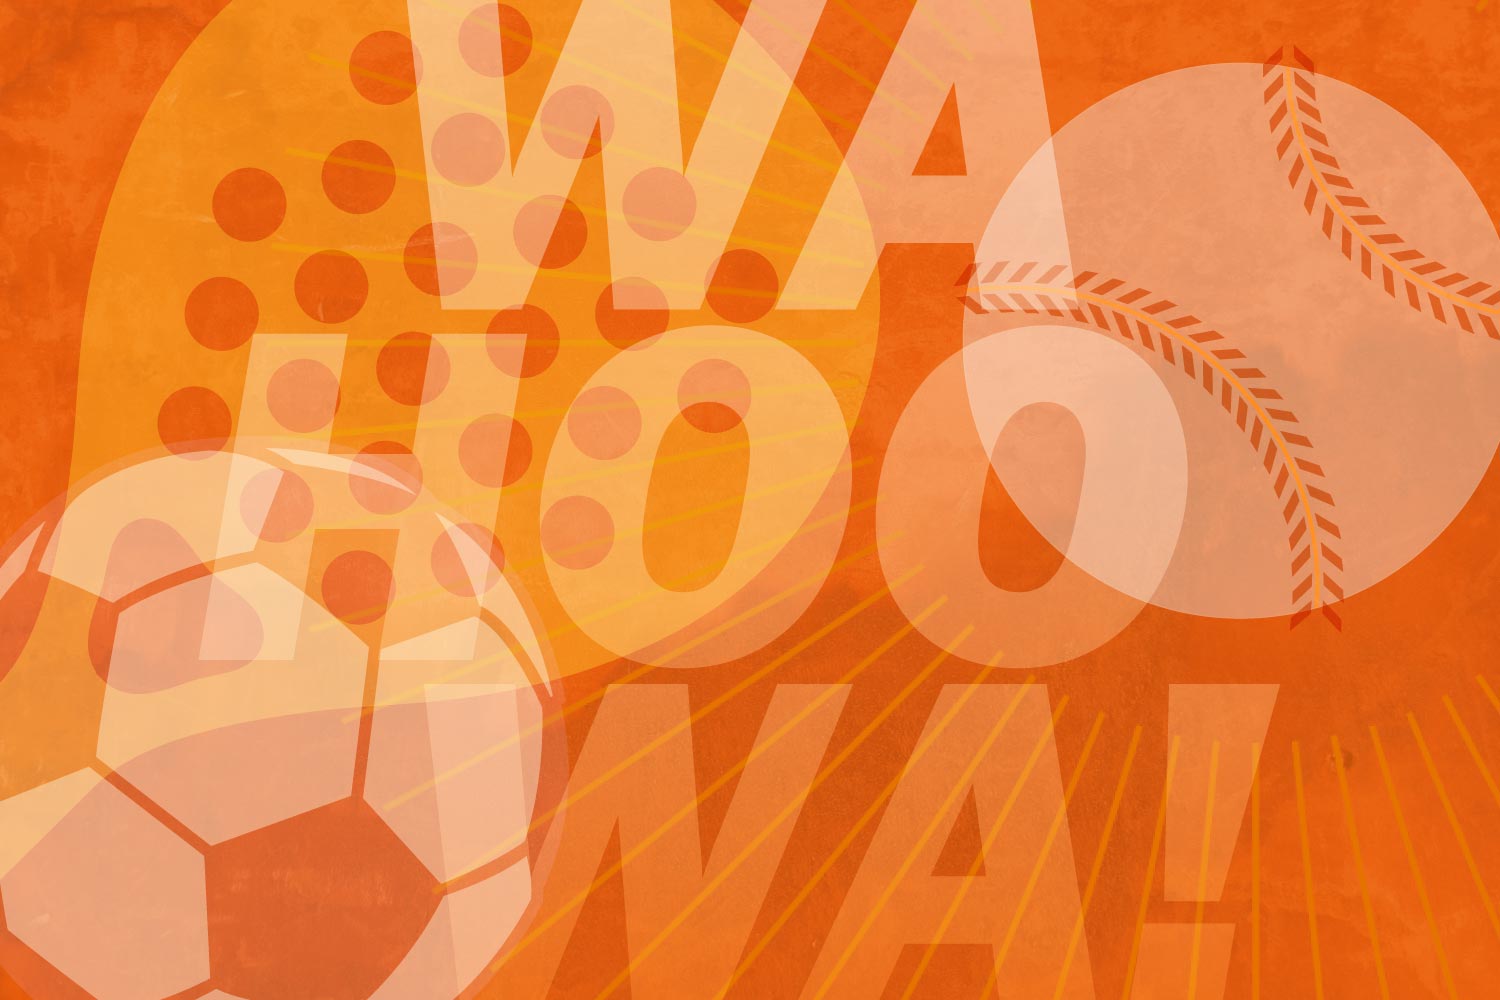 Illustration of a baseball, soccer ball,  tennis racquet with the faint text WAHOO WA!